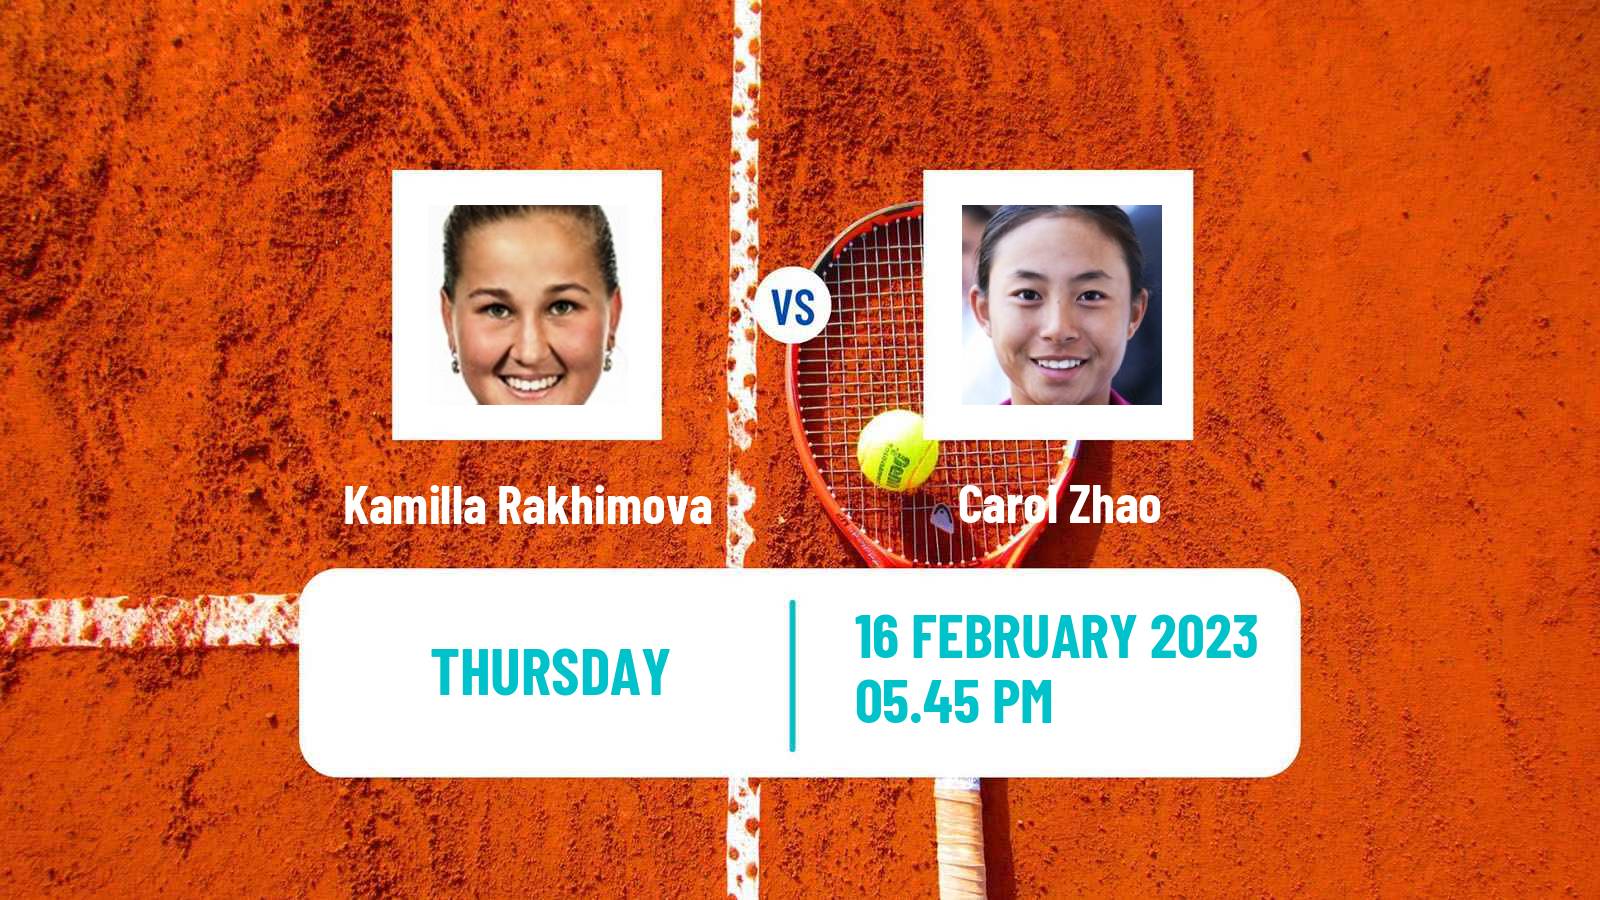 Tennis ITF Tournaments Kamilla Rakhimova - Carol Zhao